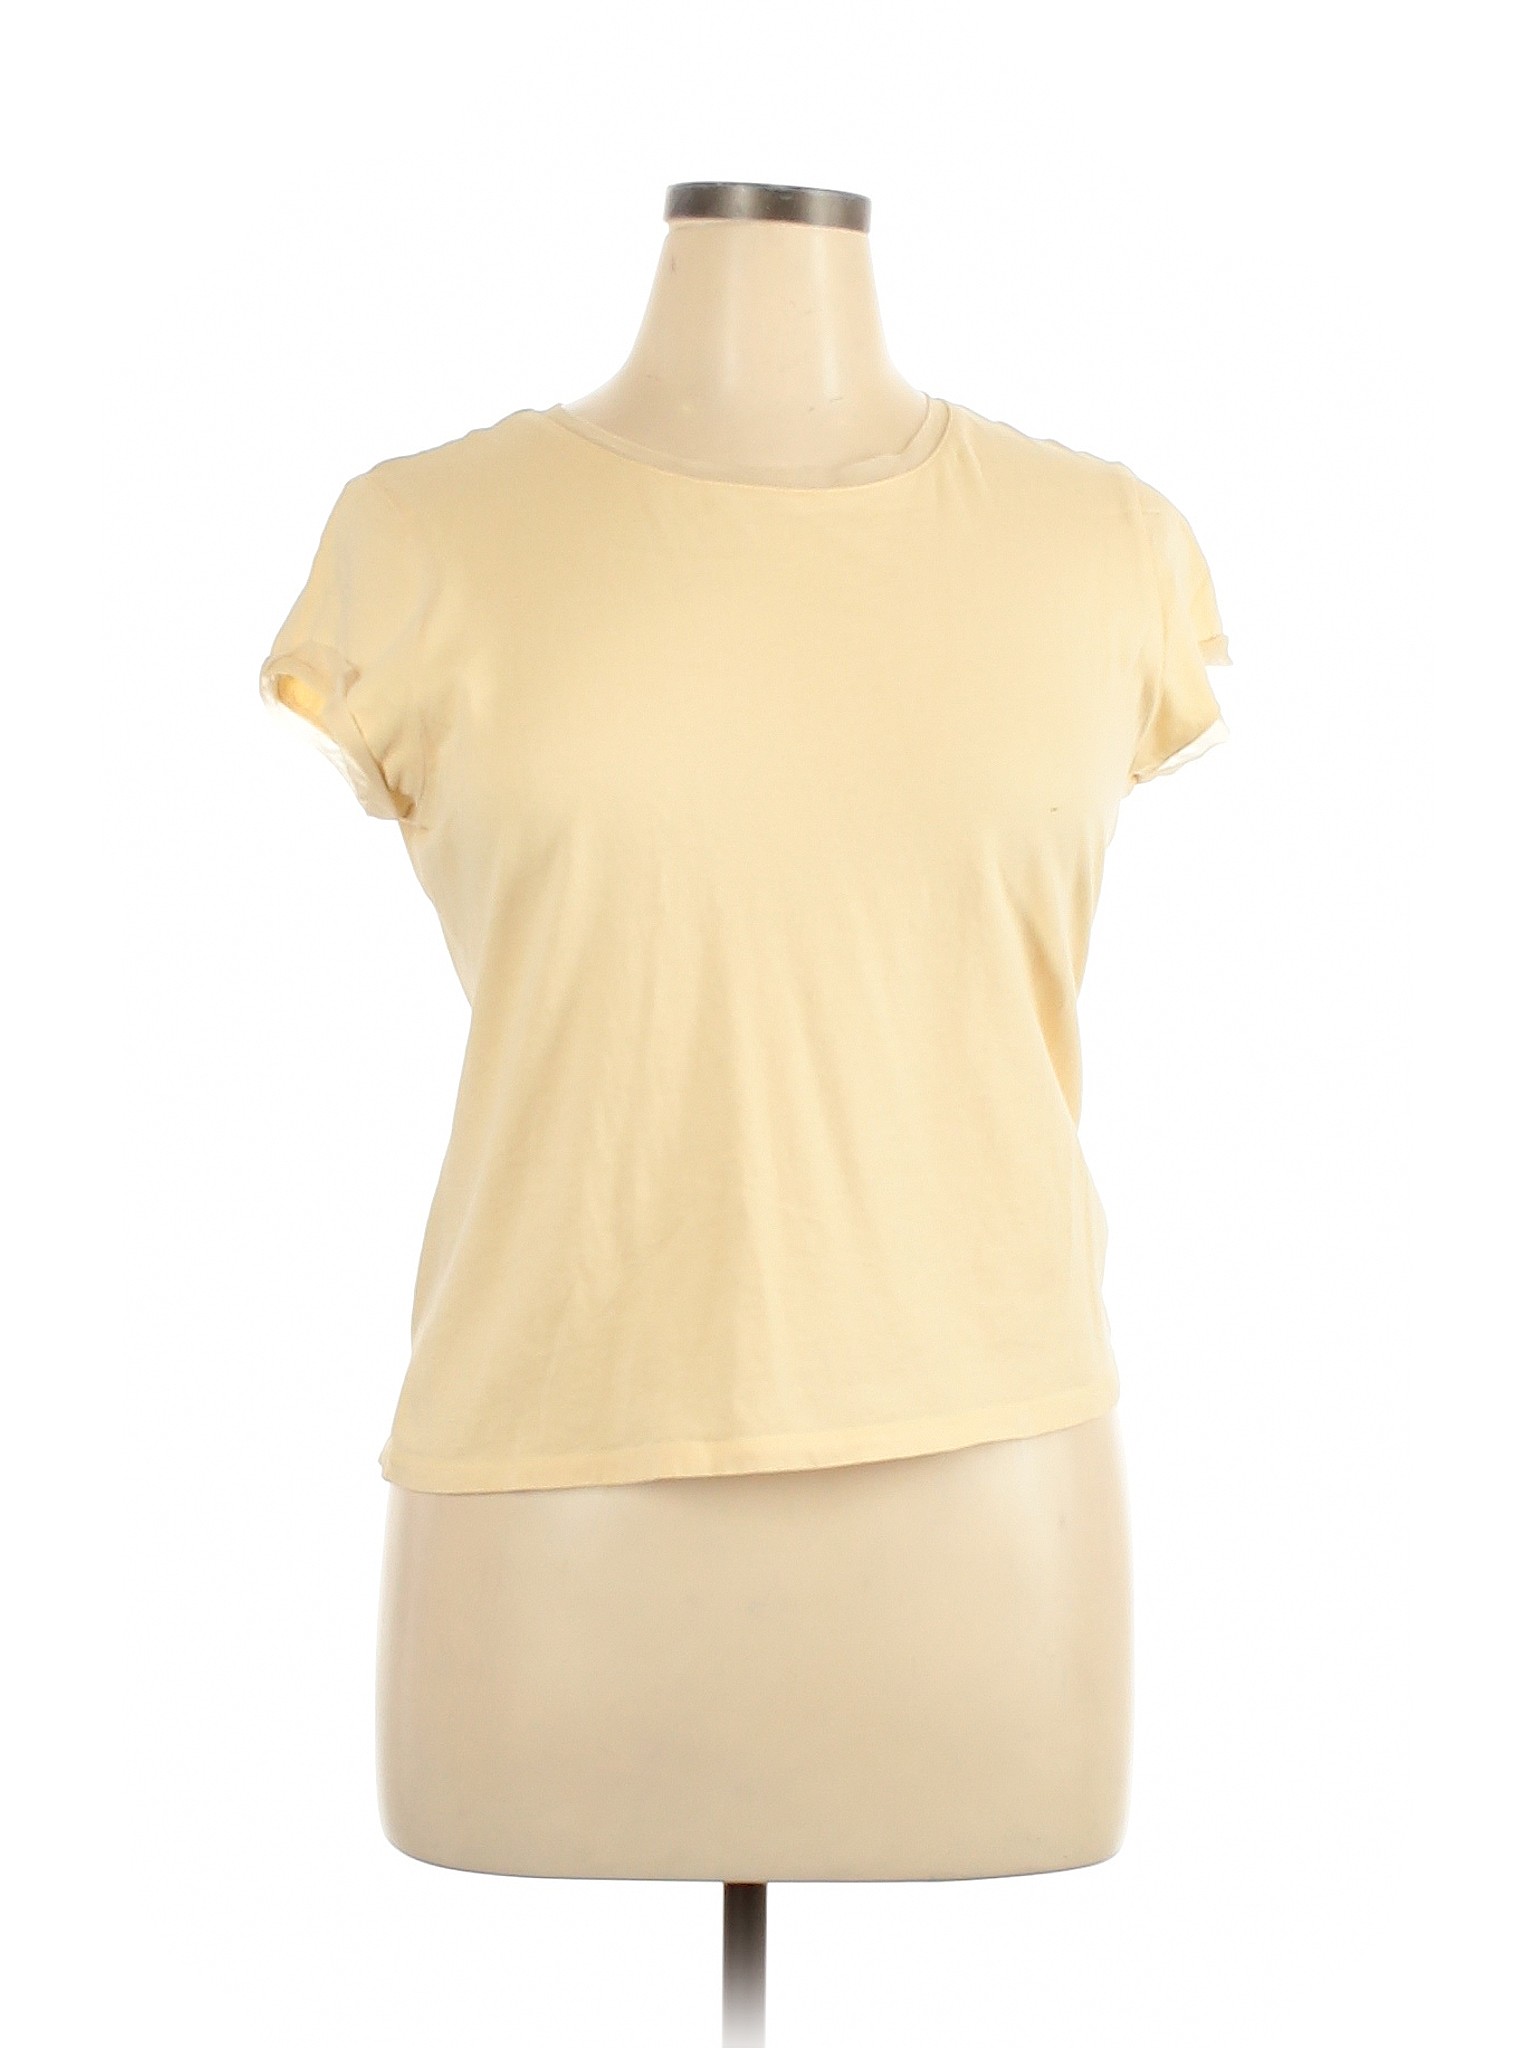 Sigrid Olsen Women Brown Short Sleeve T-Shirt XL | eBay